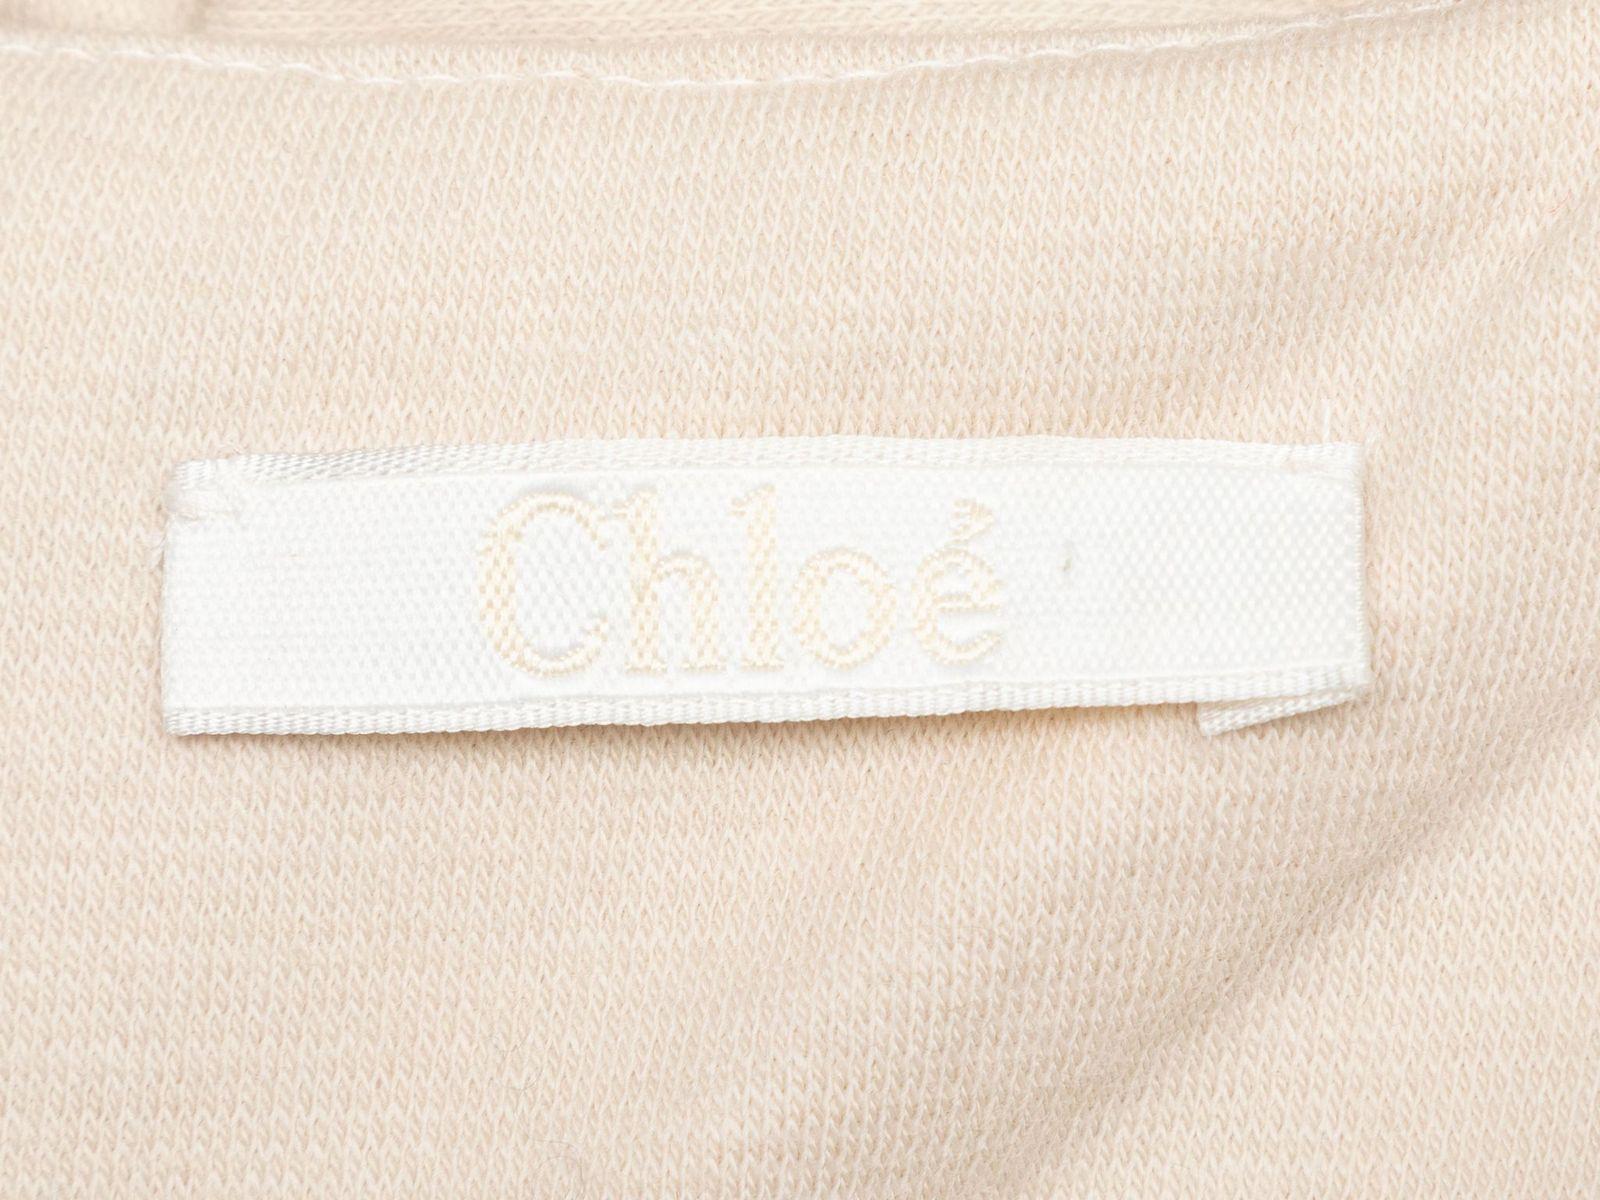 Product Details: Cream virgin wool eyelet-trimmed dress by Chloe. Short sleeves. Bateau neckline. Zip closure at center back. 32